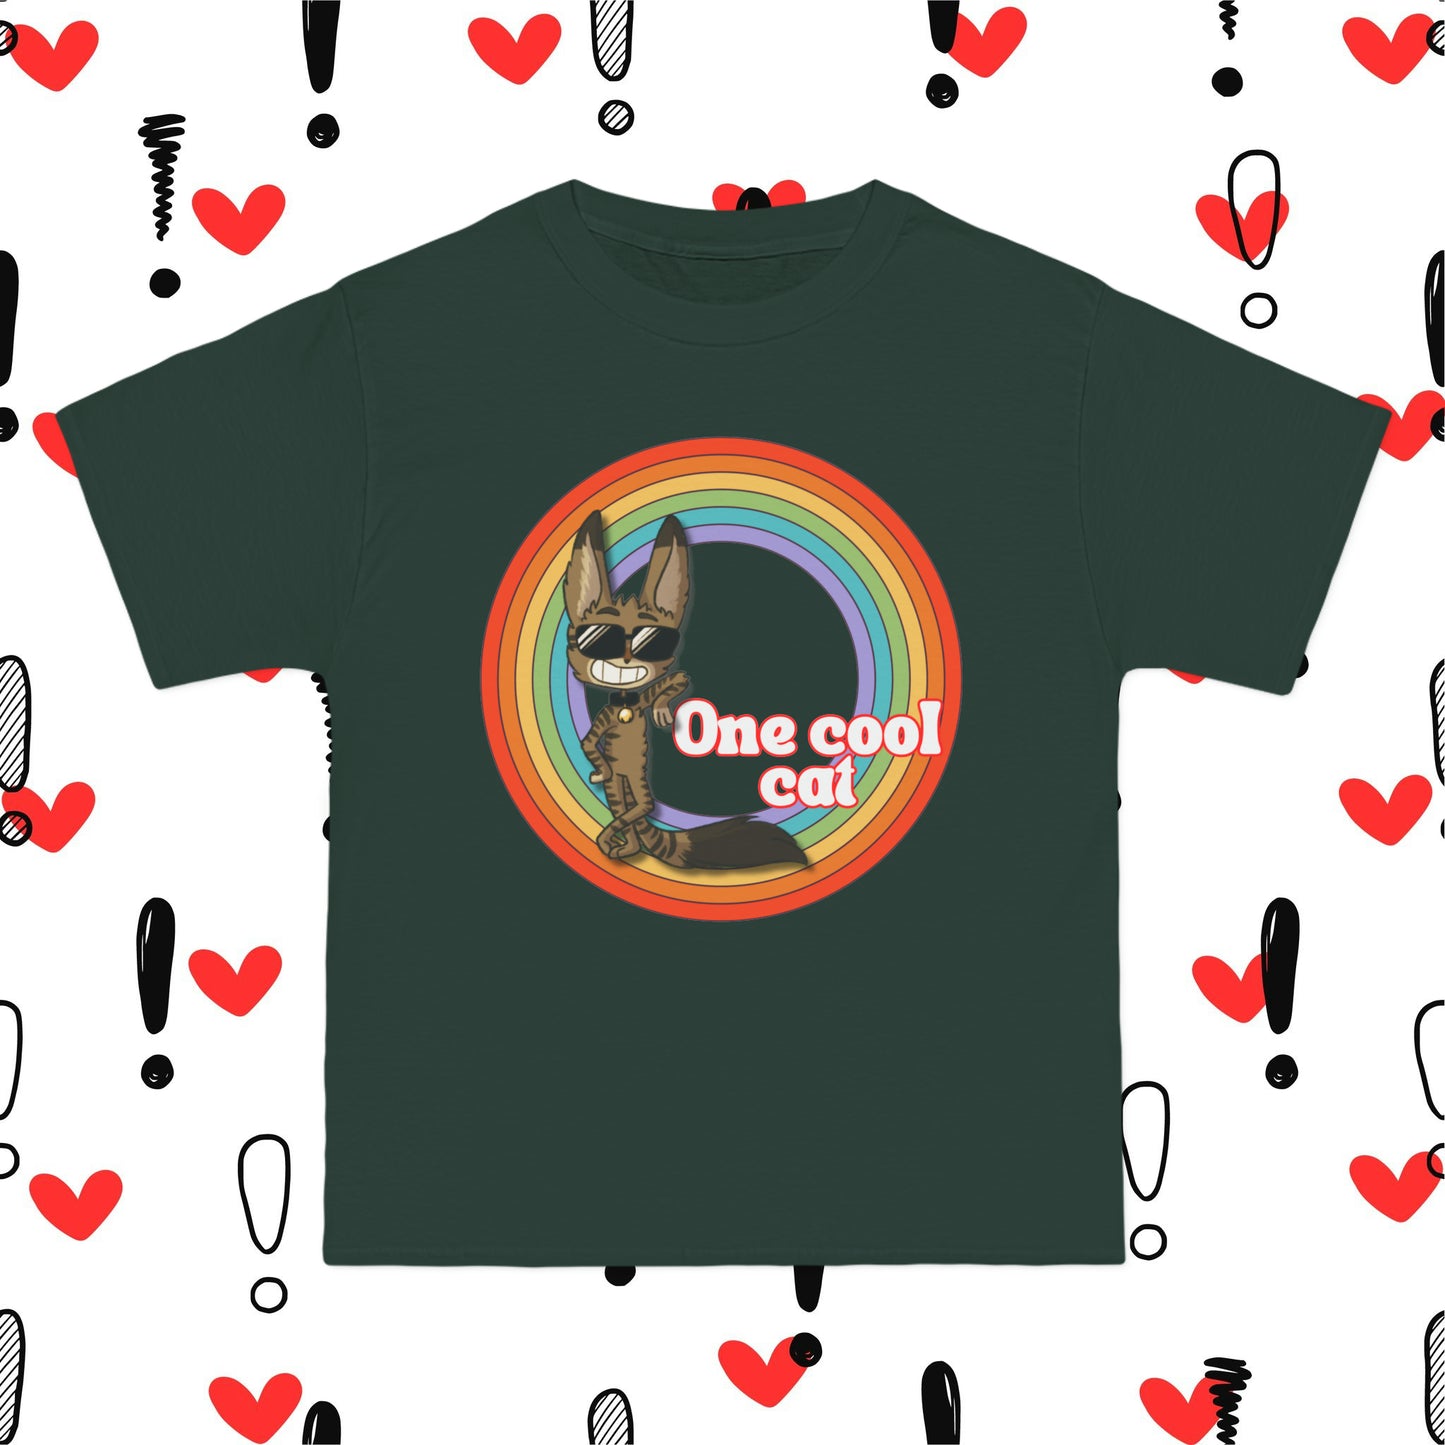 One Cool Cat - Super Soft Beefy-T®  Short-Sleeve T-Shirt